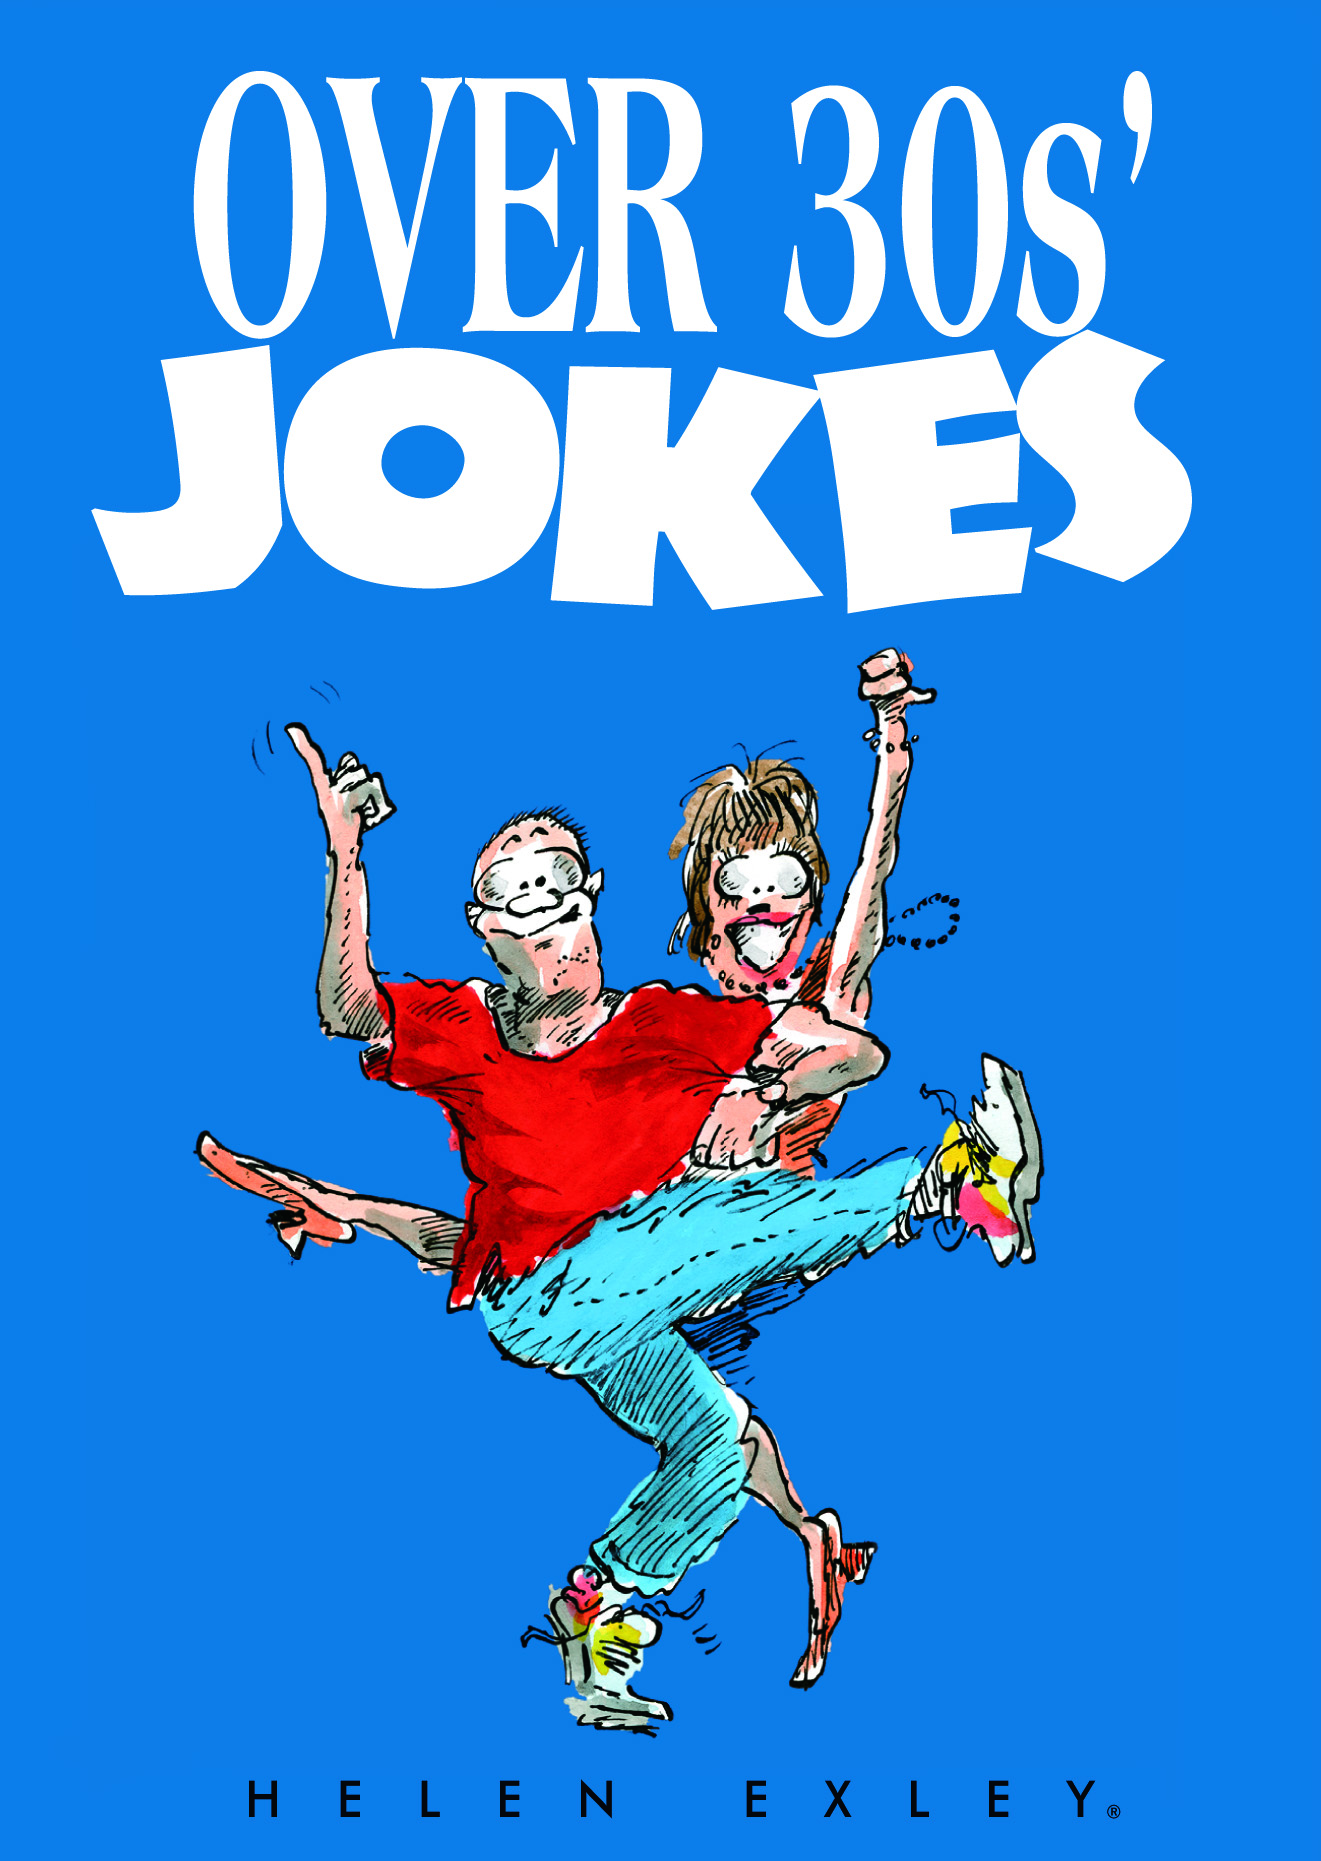 HE JOKES Over 30s Jokes (2008 ed)